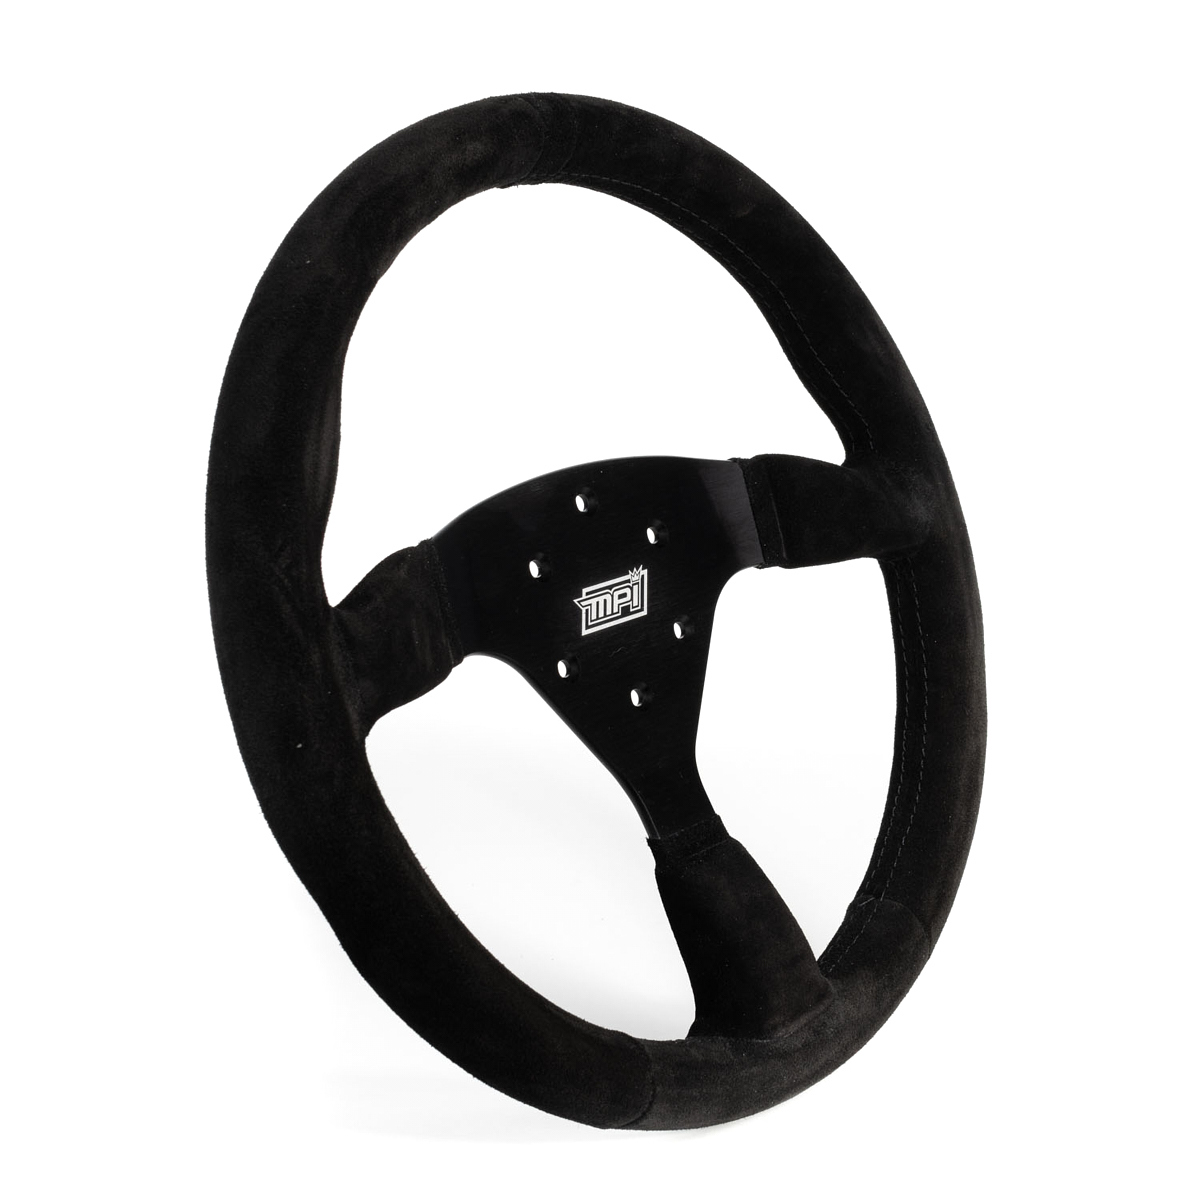 MPI USA MPI-F2-14-B Steering Wheel, Track Day, 14 in Diameter, 1-1/4 in Dish, 3-Spoke, Black Suede Grip, Aluminum, Black Anodized, Each